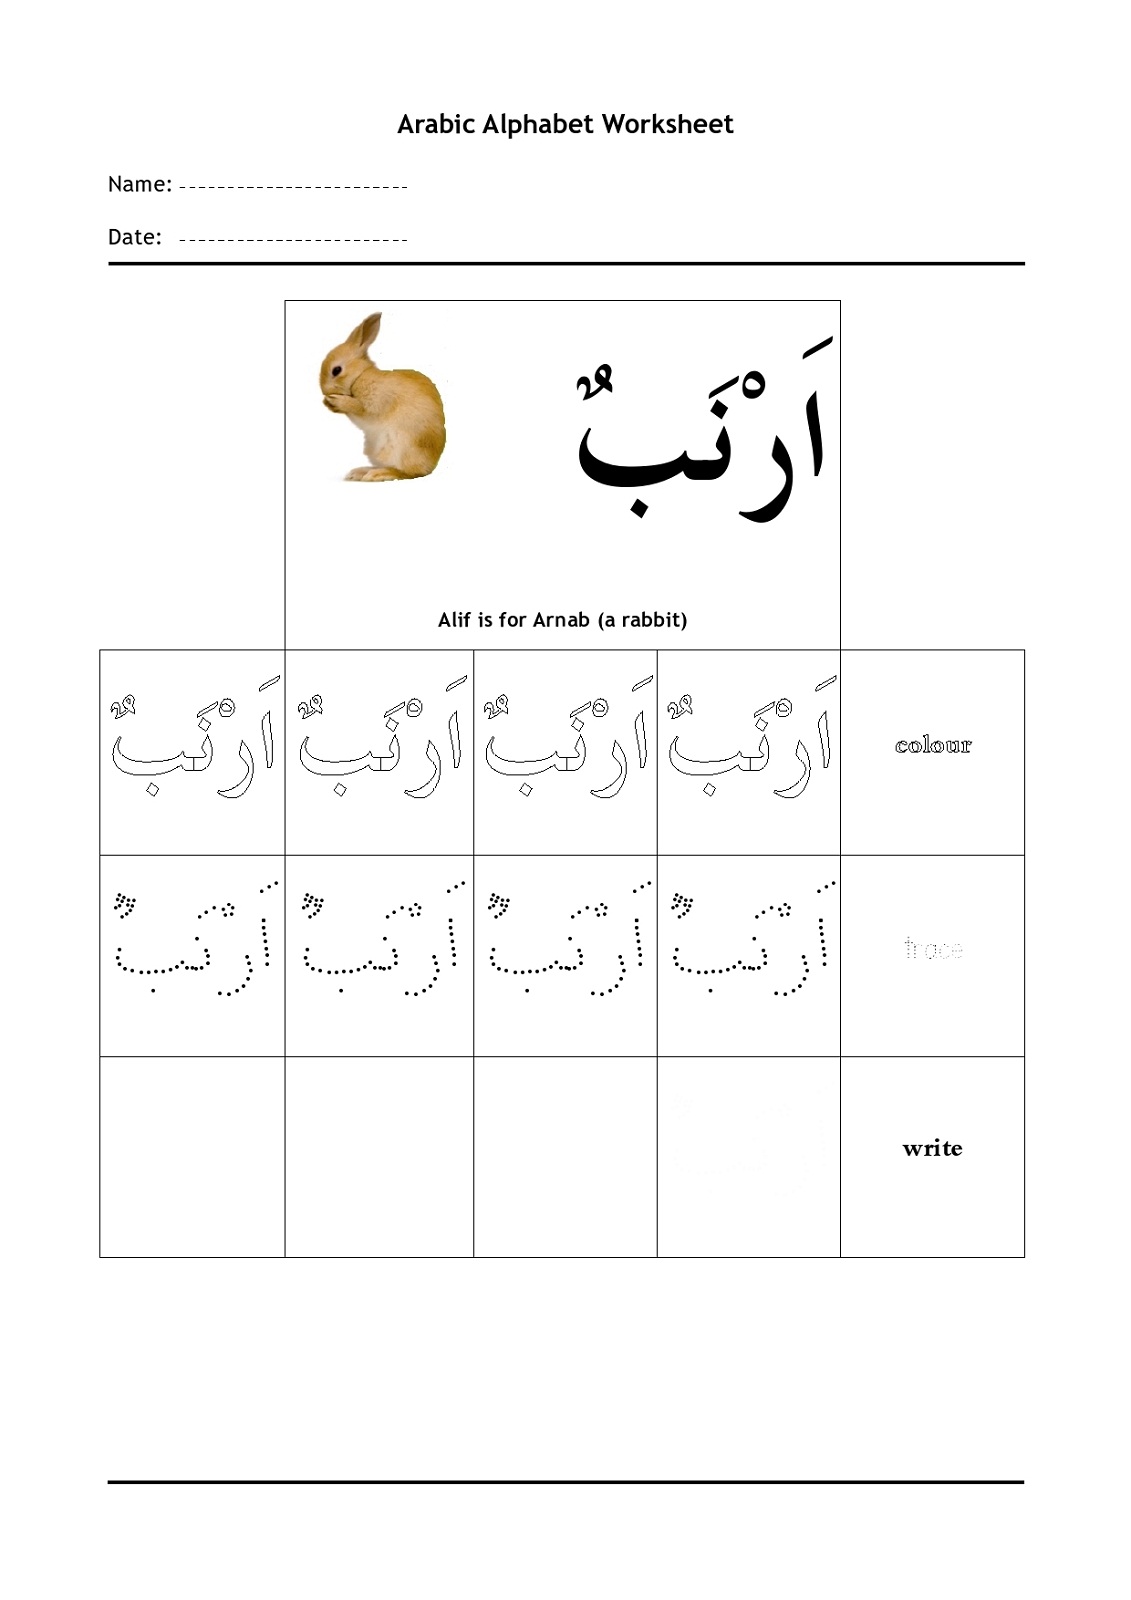 free-ebook-my-arabic-alphabet-workbook-pt-1-basic-arabic-letters-the-islamic-home-education